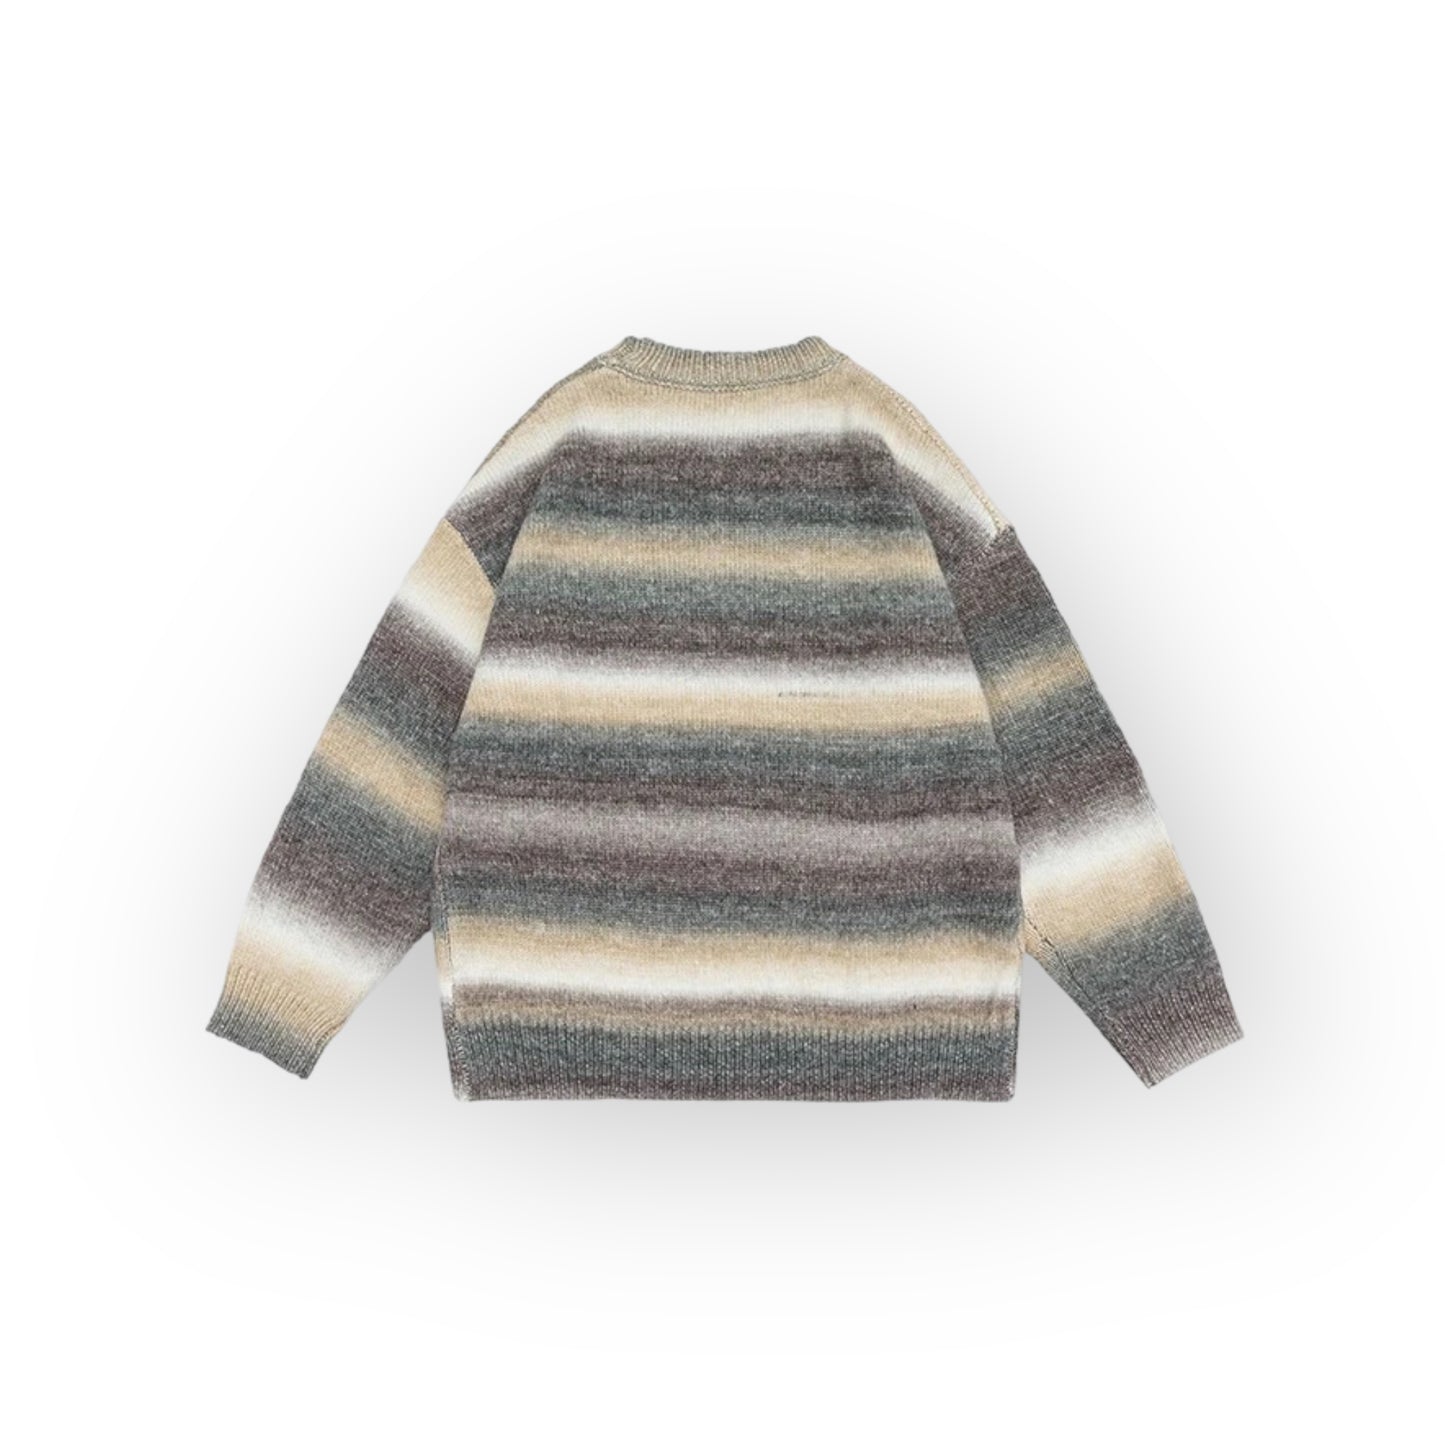 Neoism Stripe Rainbow Color Chic High Streetwear Sweater